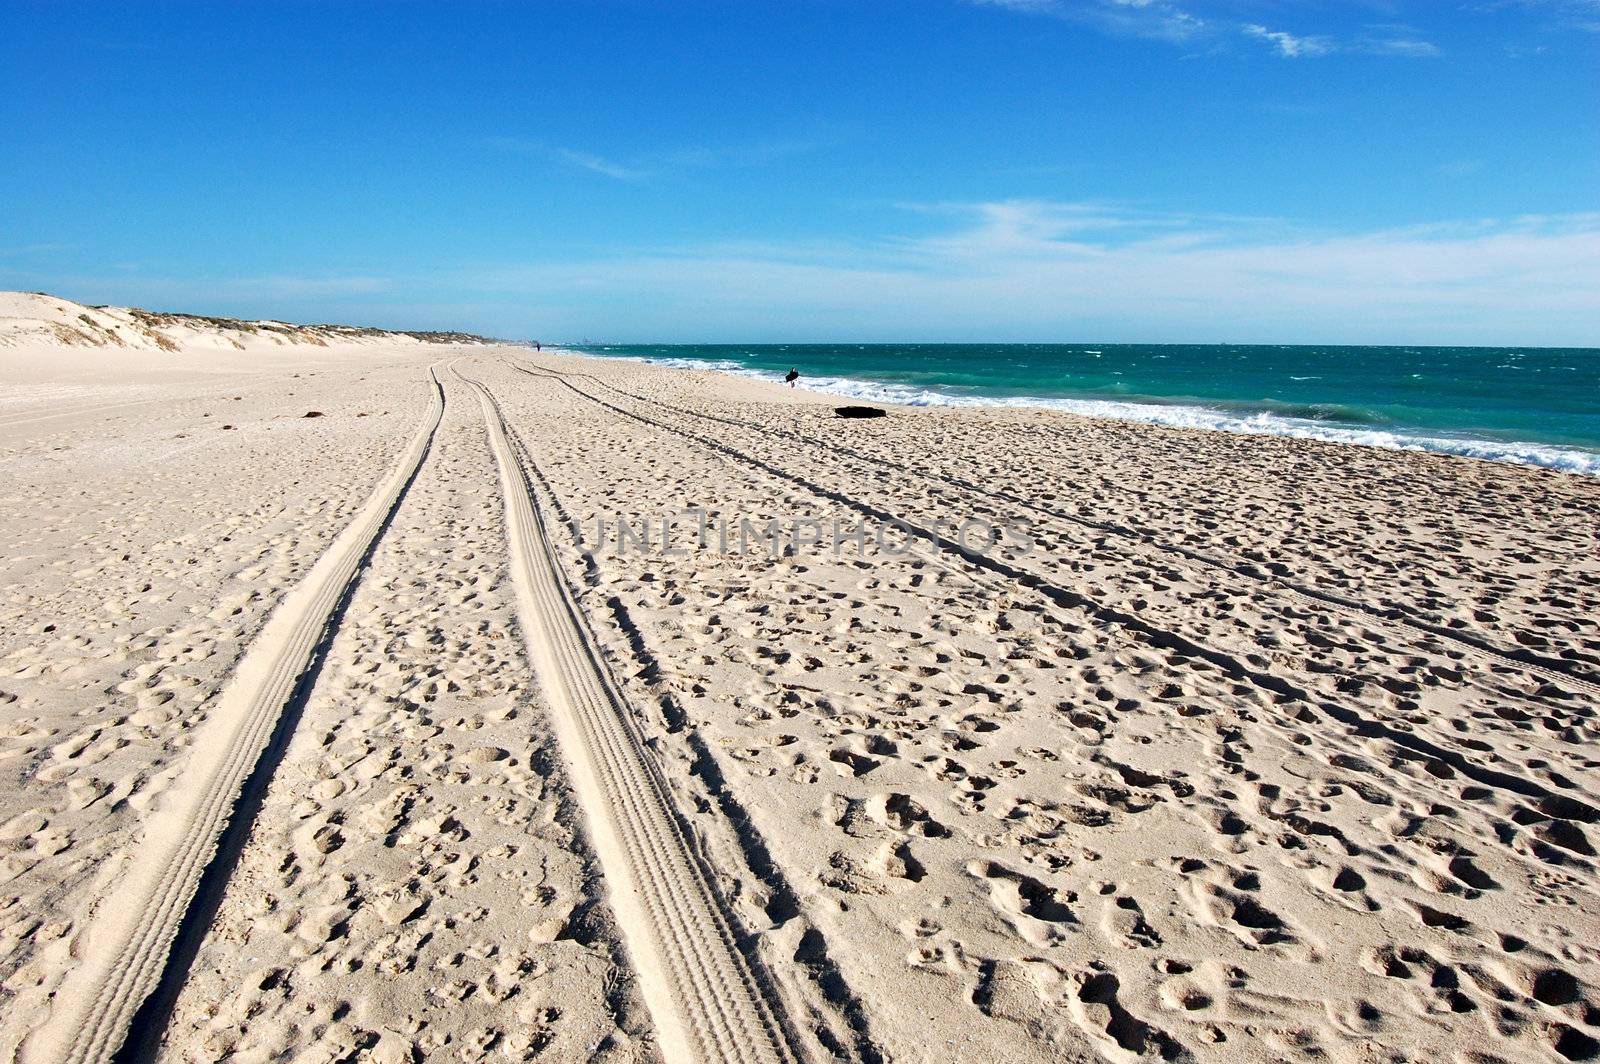 Car track on white sand beach by danemo